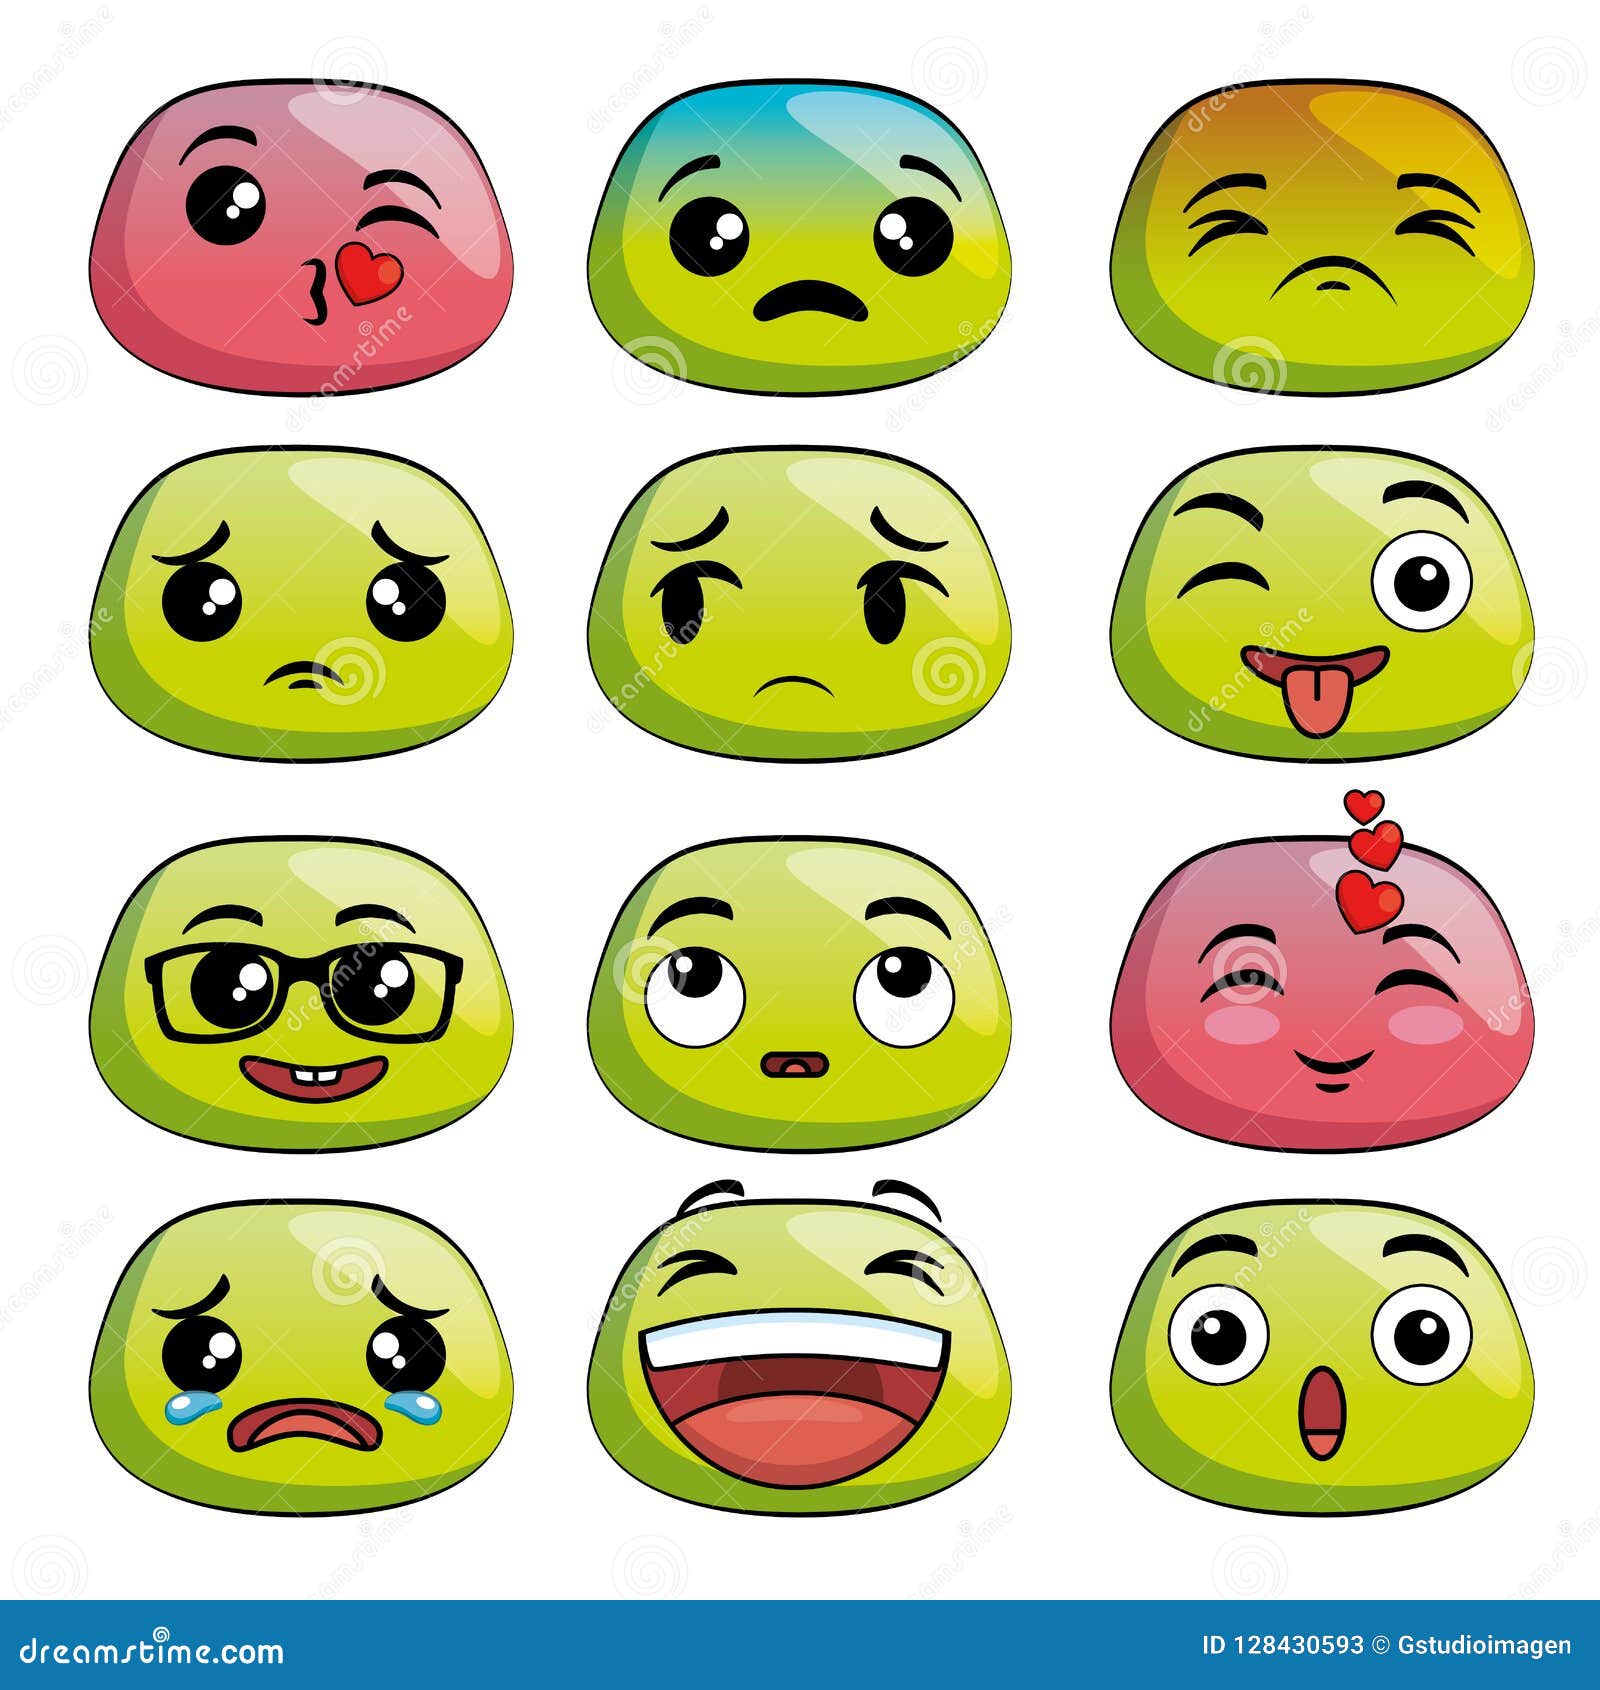 Cute emoji cartoon icons stock vector. Illustration of background ...